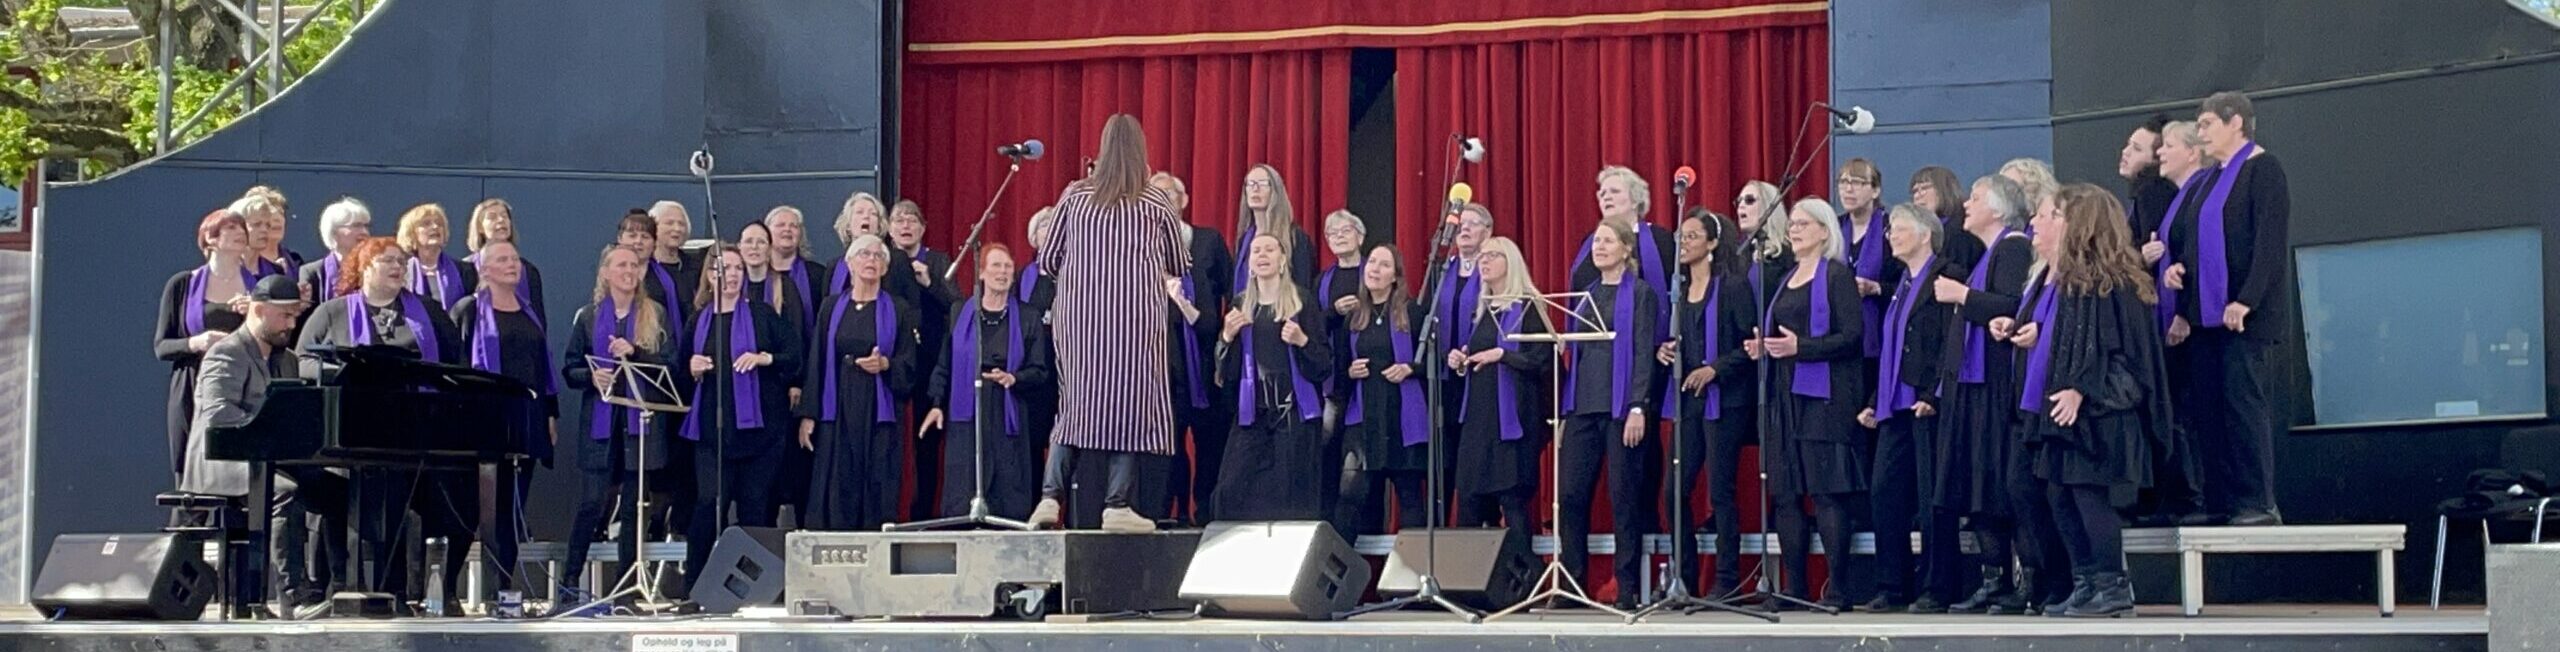 Farum Gospel Choir optræder på Bakkens friluftsscene 22. maj 2022. Med dirigent Linda Andrews.